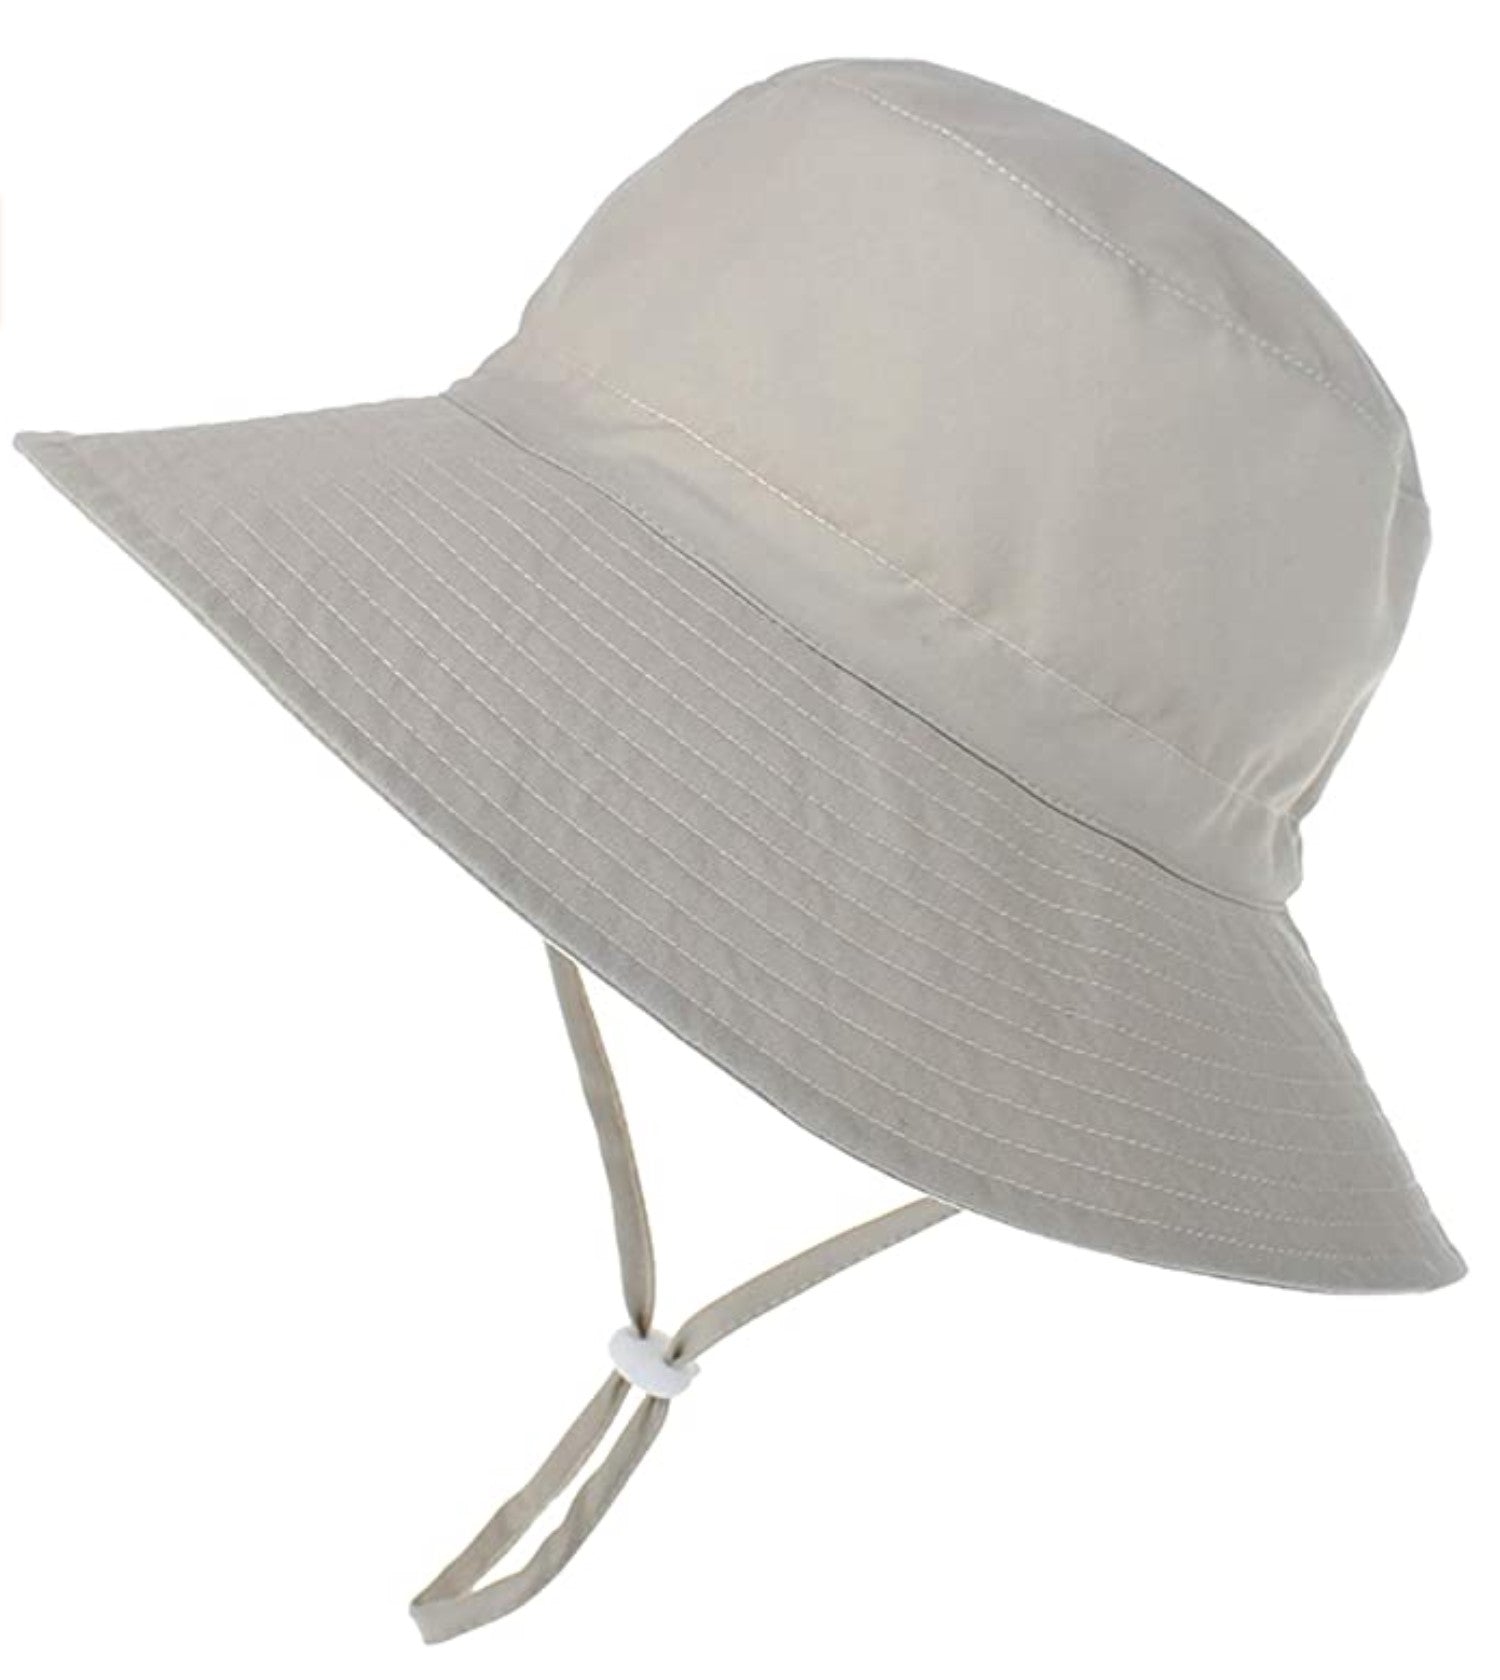 Toddler, Sun Protection Bucket Hat (Khaki)